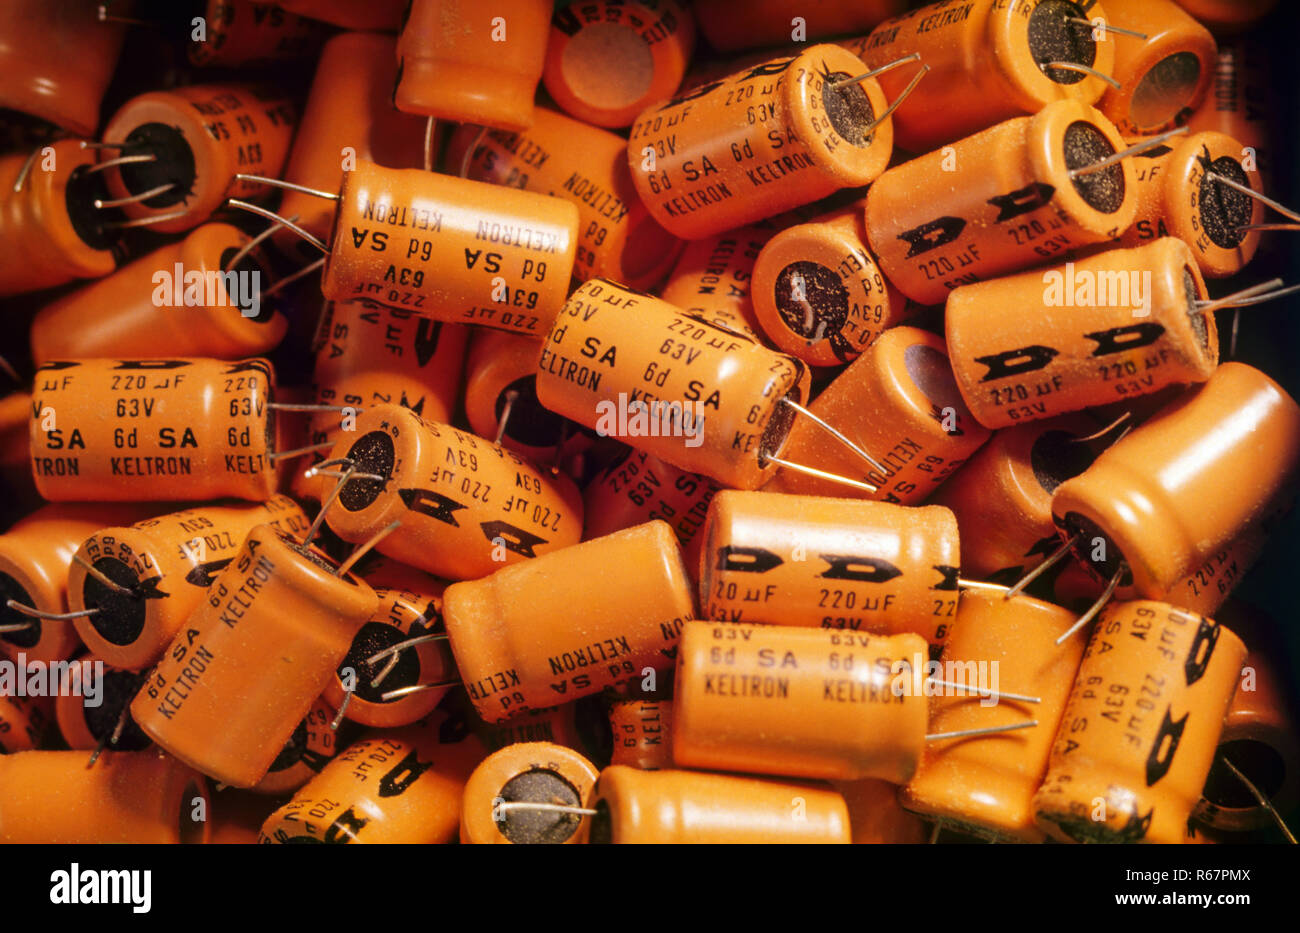 Batteries Stock Photo